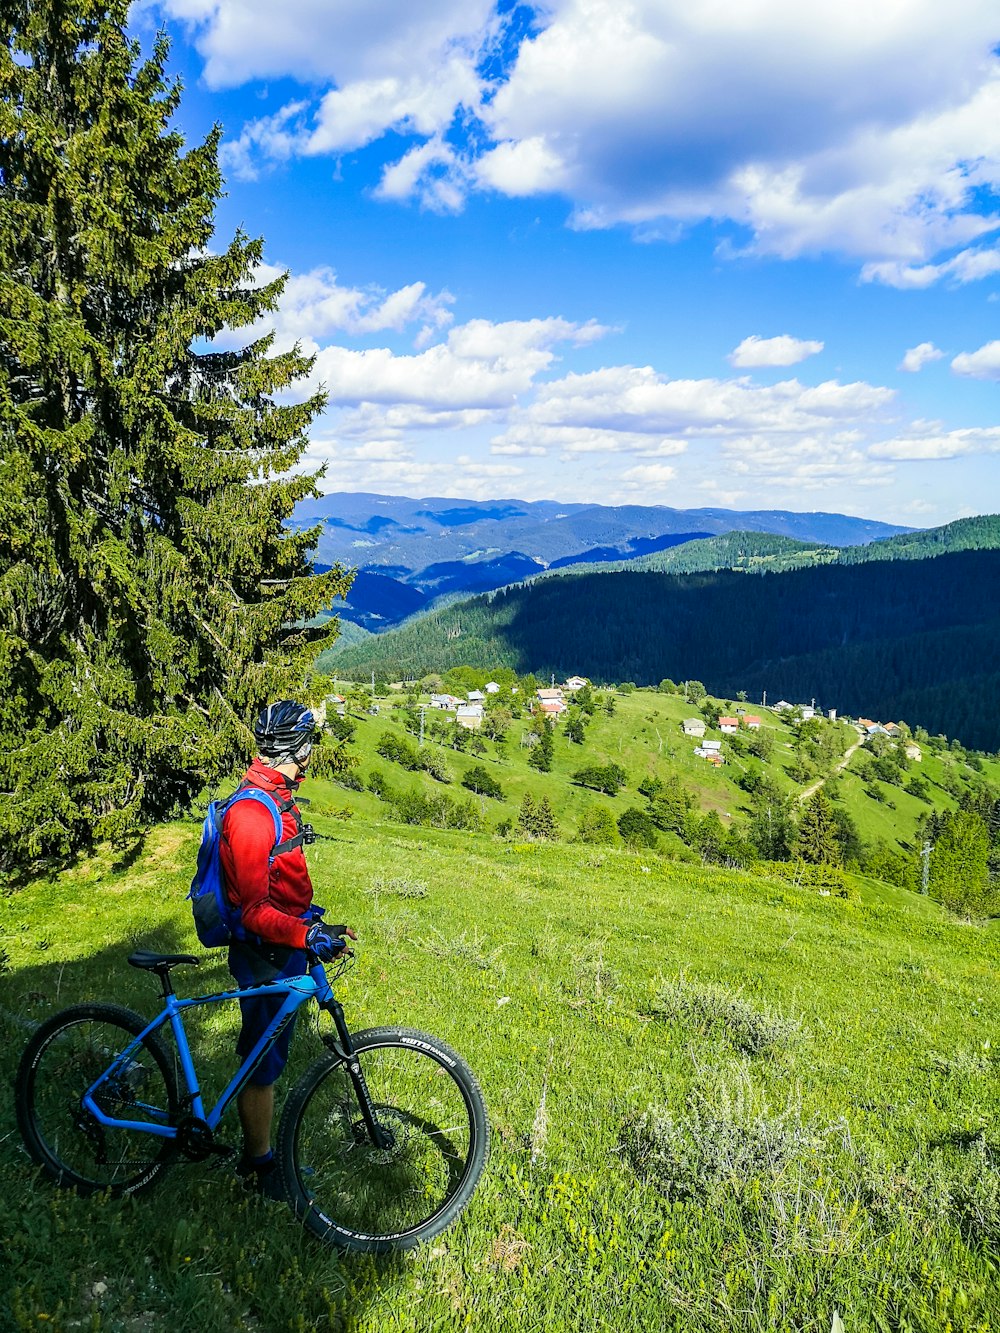 man in orange jacket riding blue mountain bike on green grass field during daytime